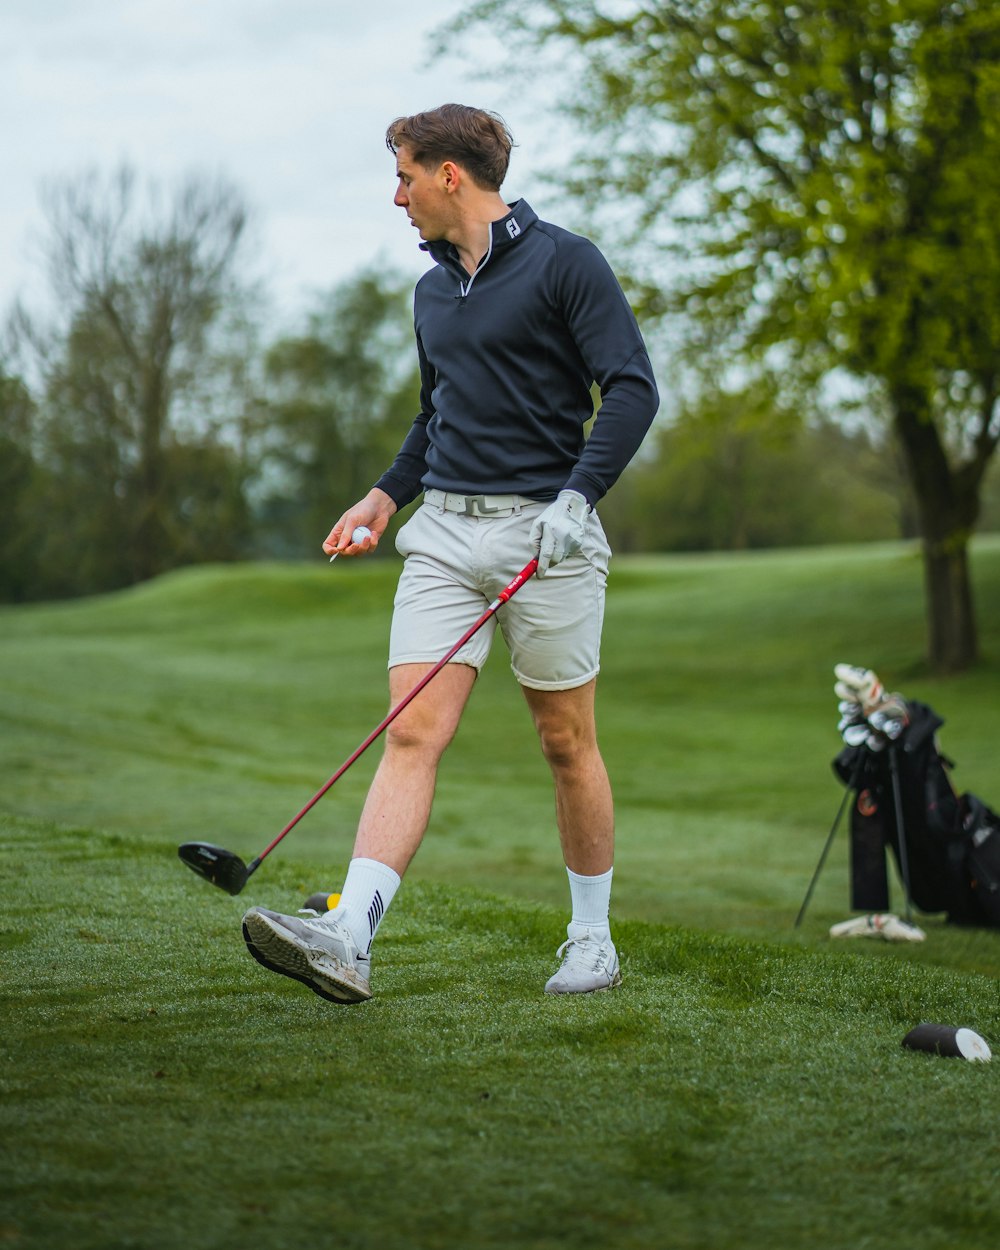 a man holding a golf club on a golf course